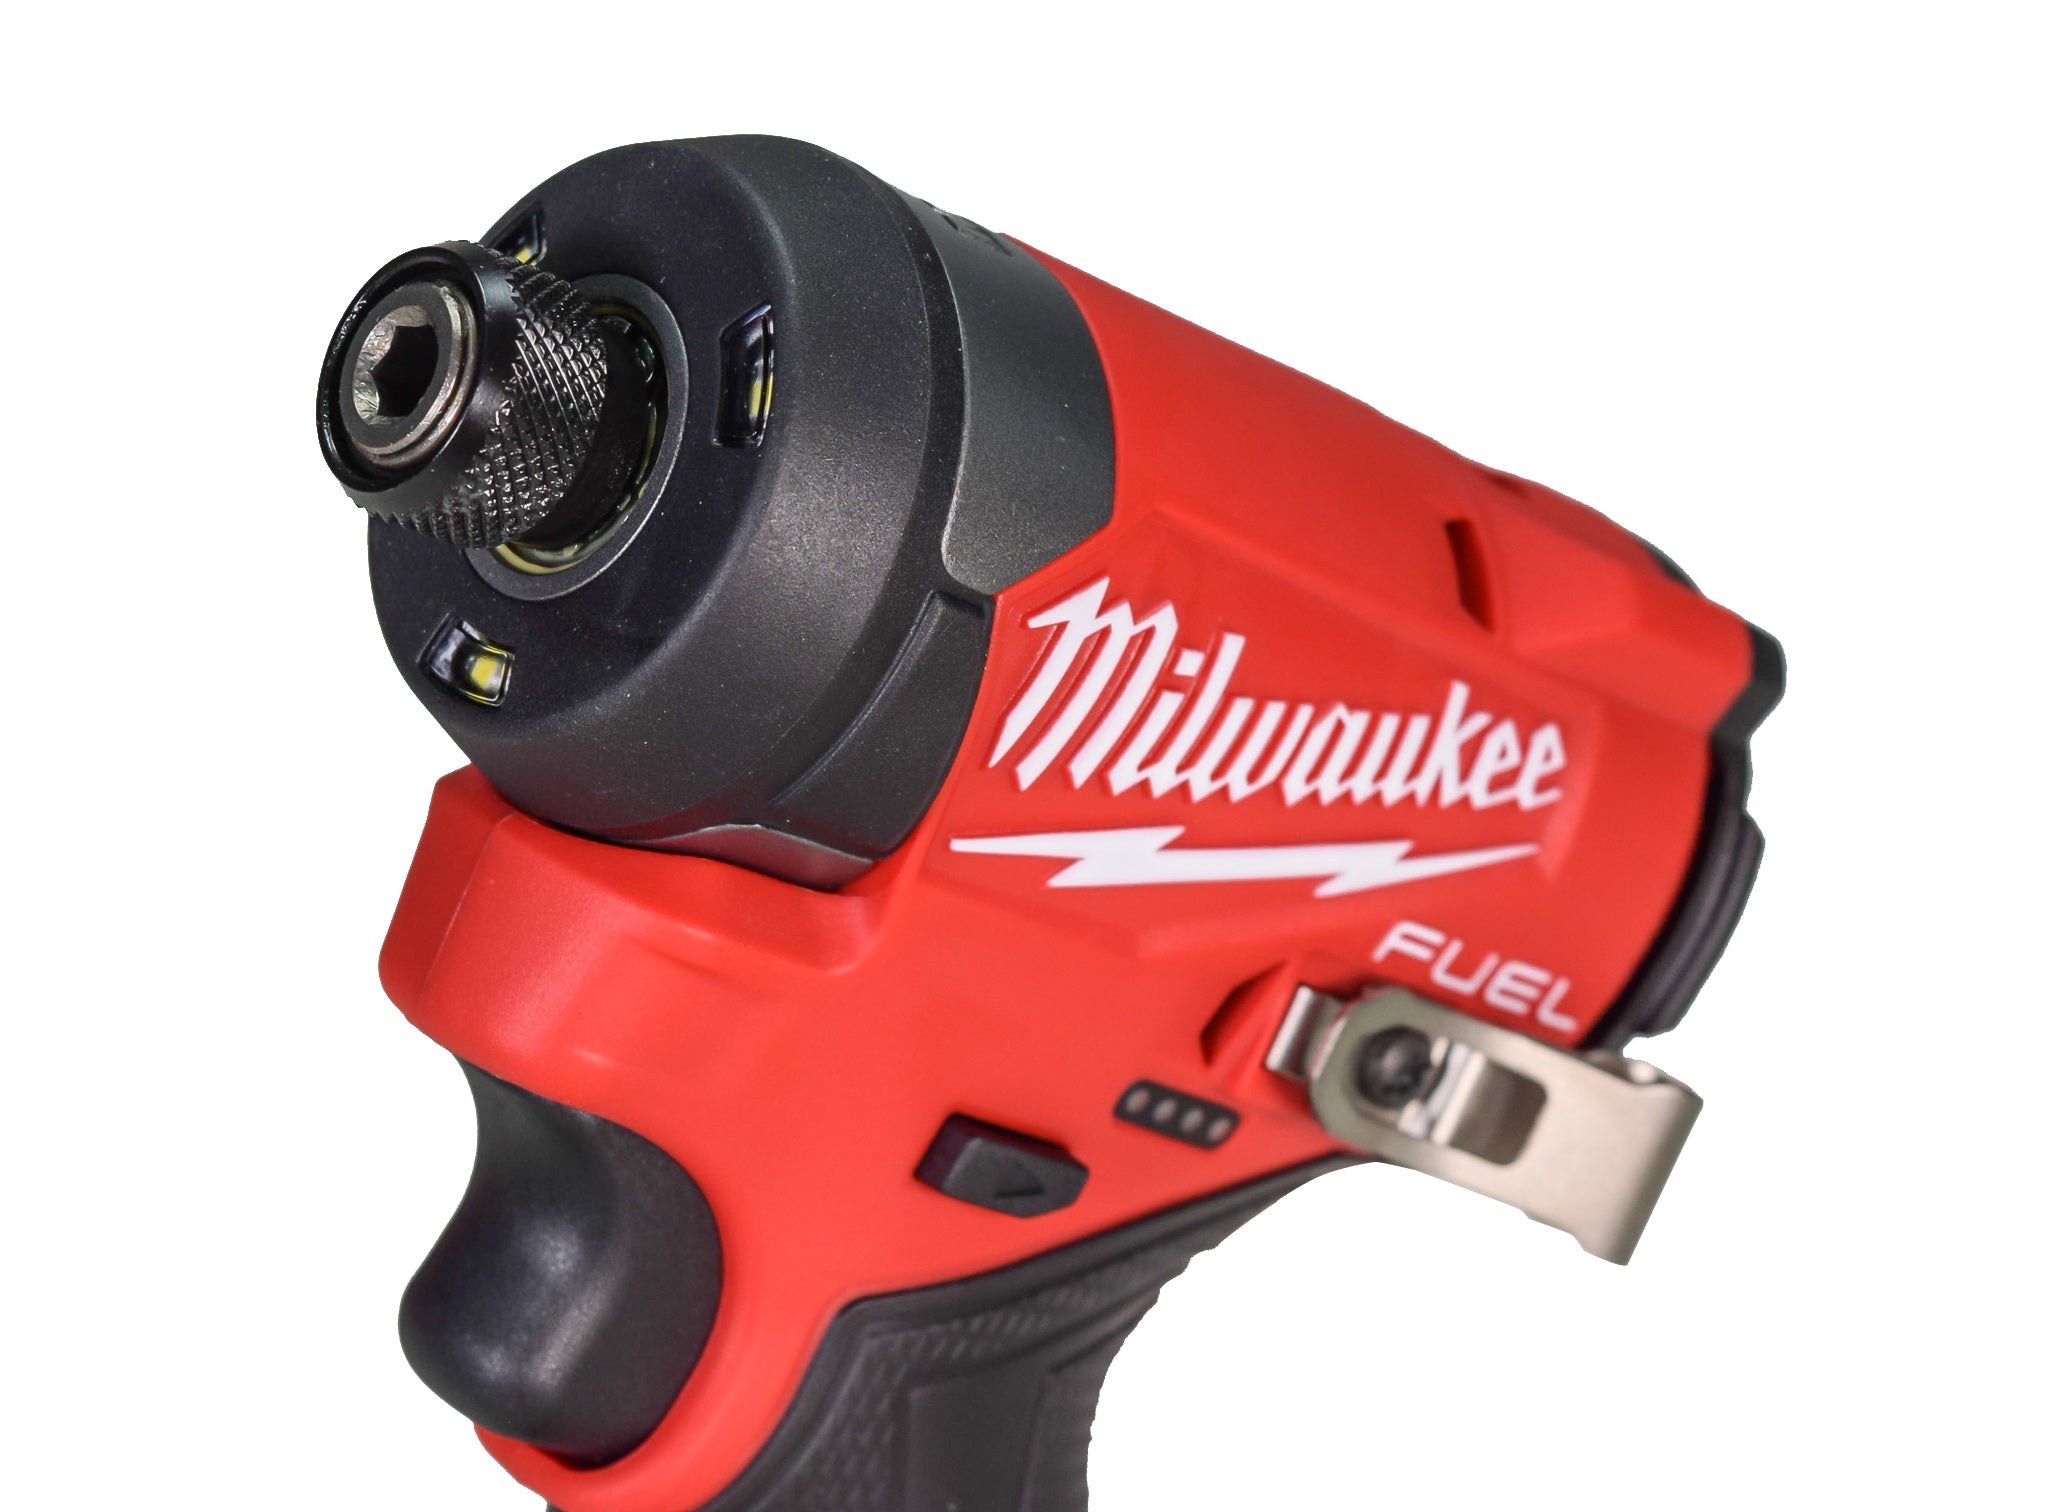 Milwaukee 3453-22 12V Fuel 1/4" Cordless Hex Impact Driver Kit